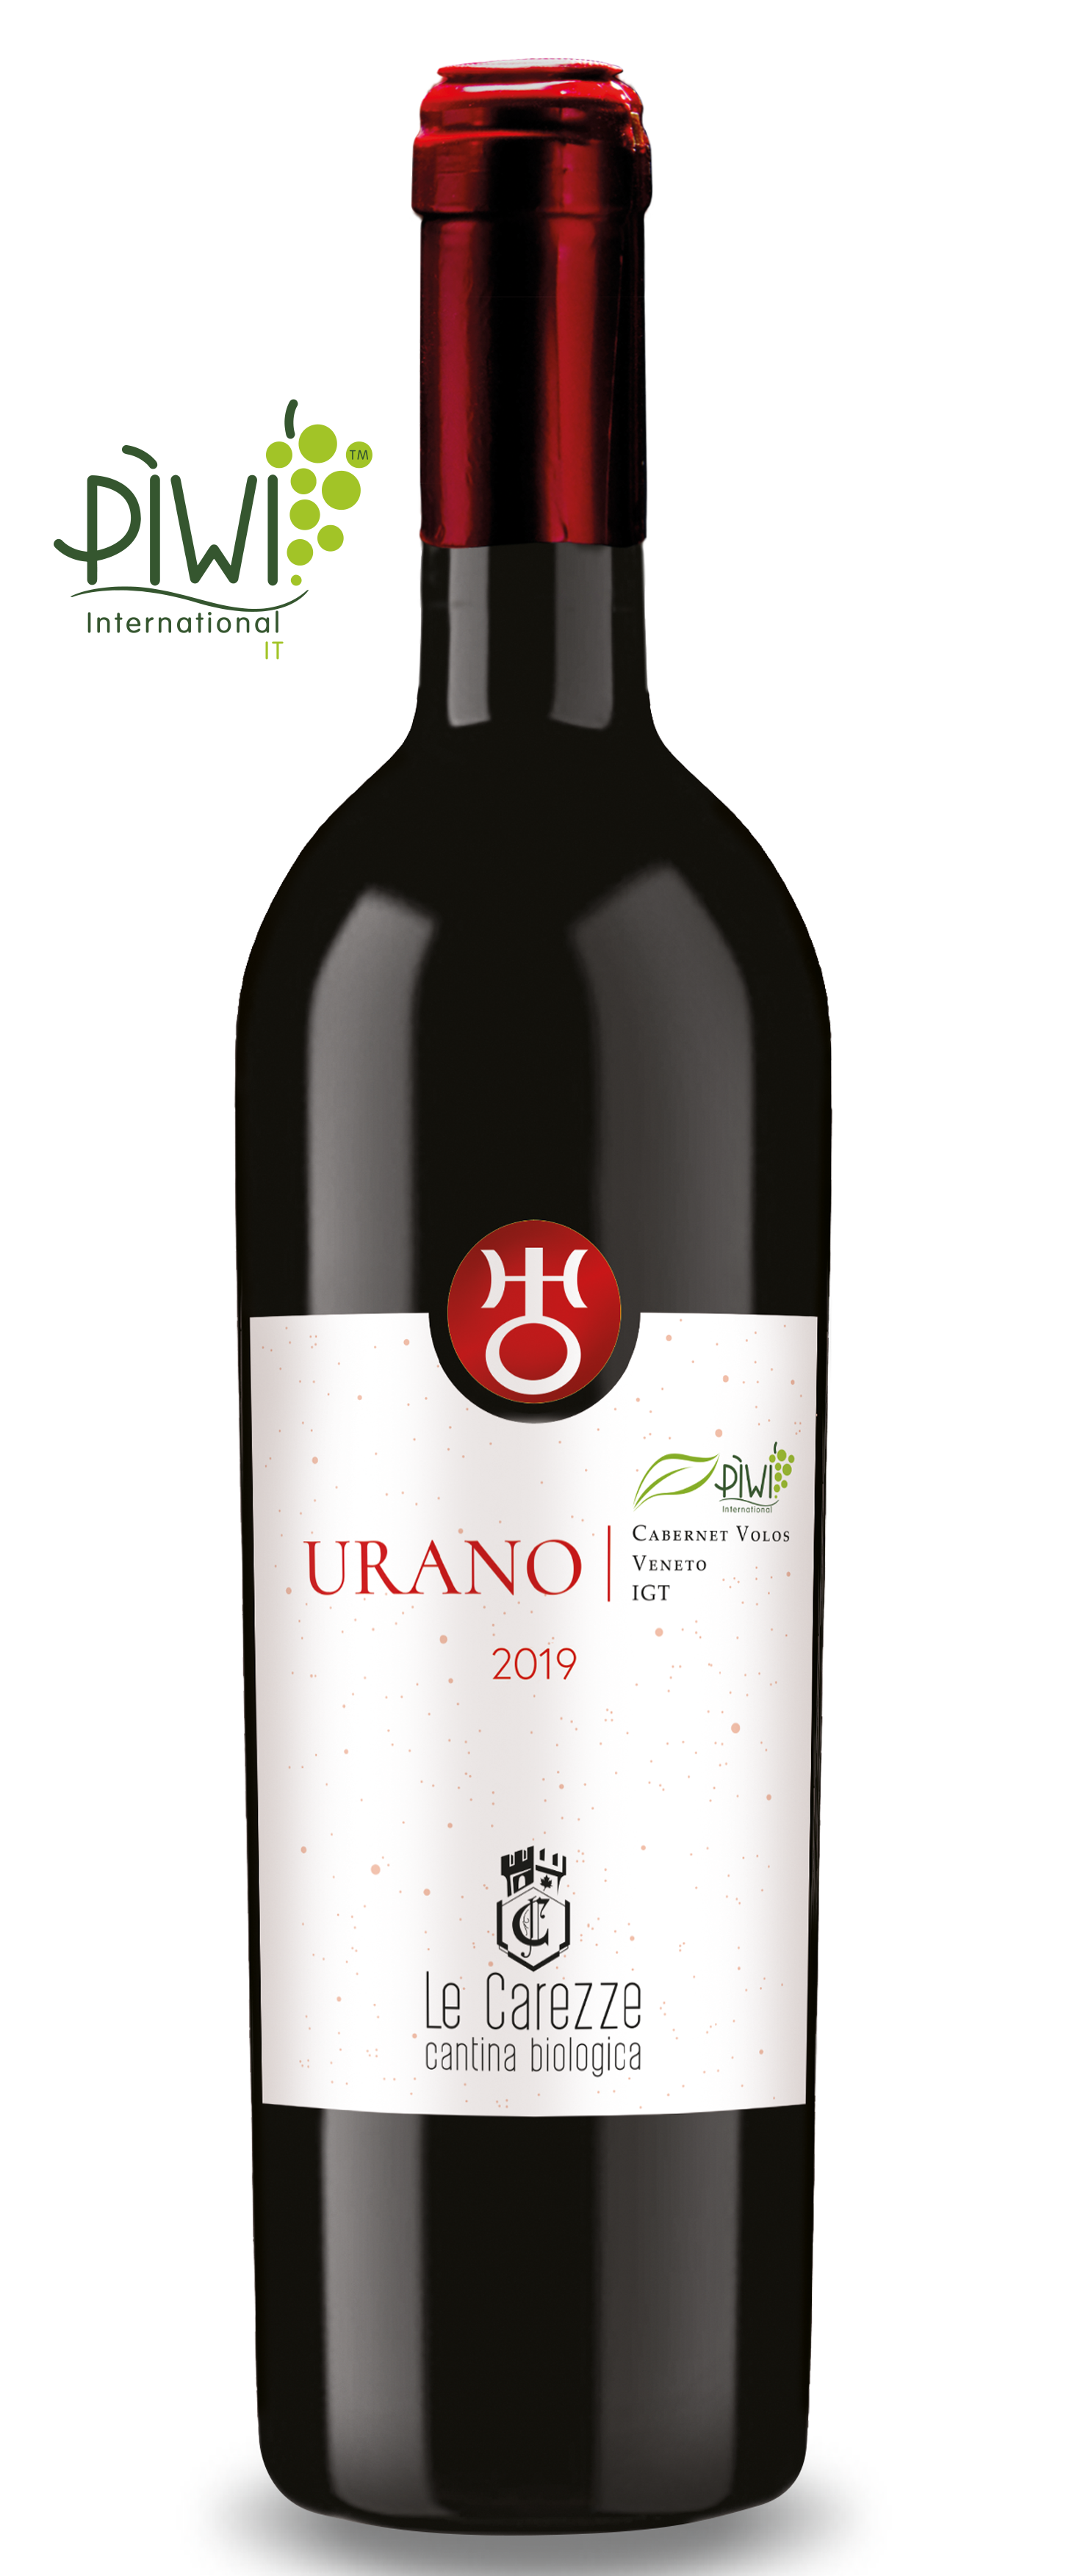 Bottle of wine Urano 2019